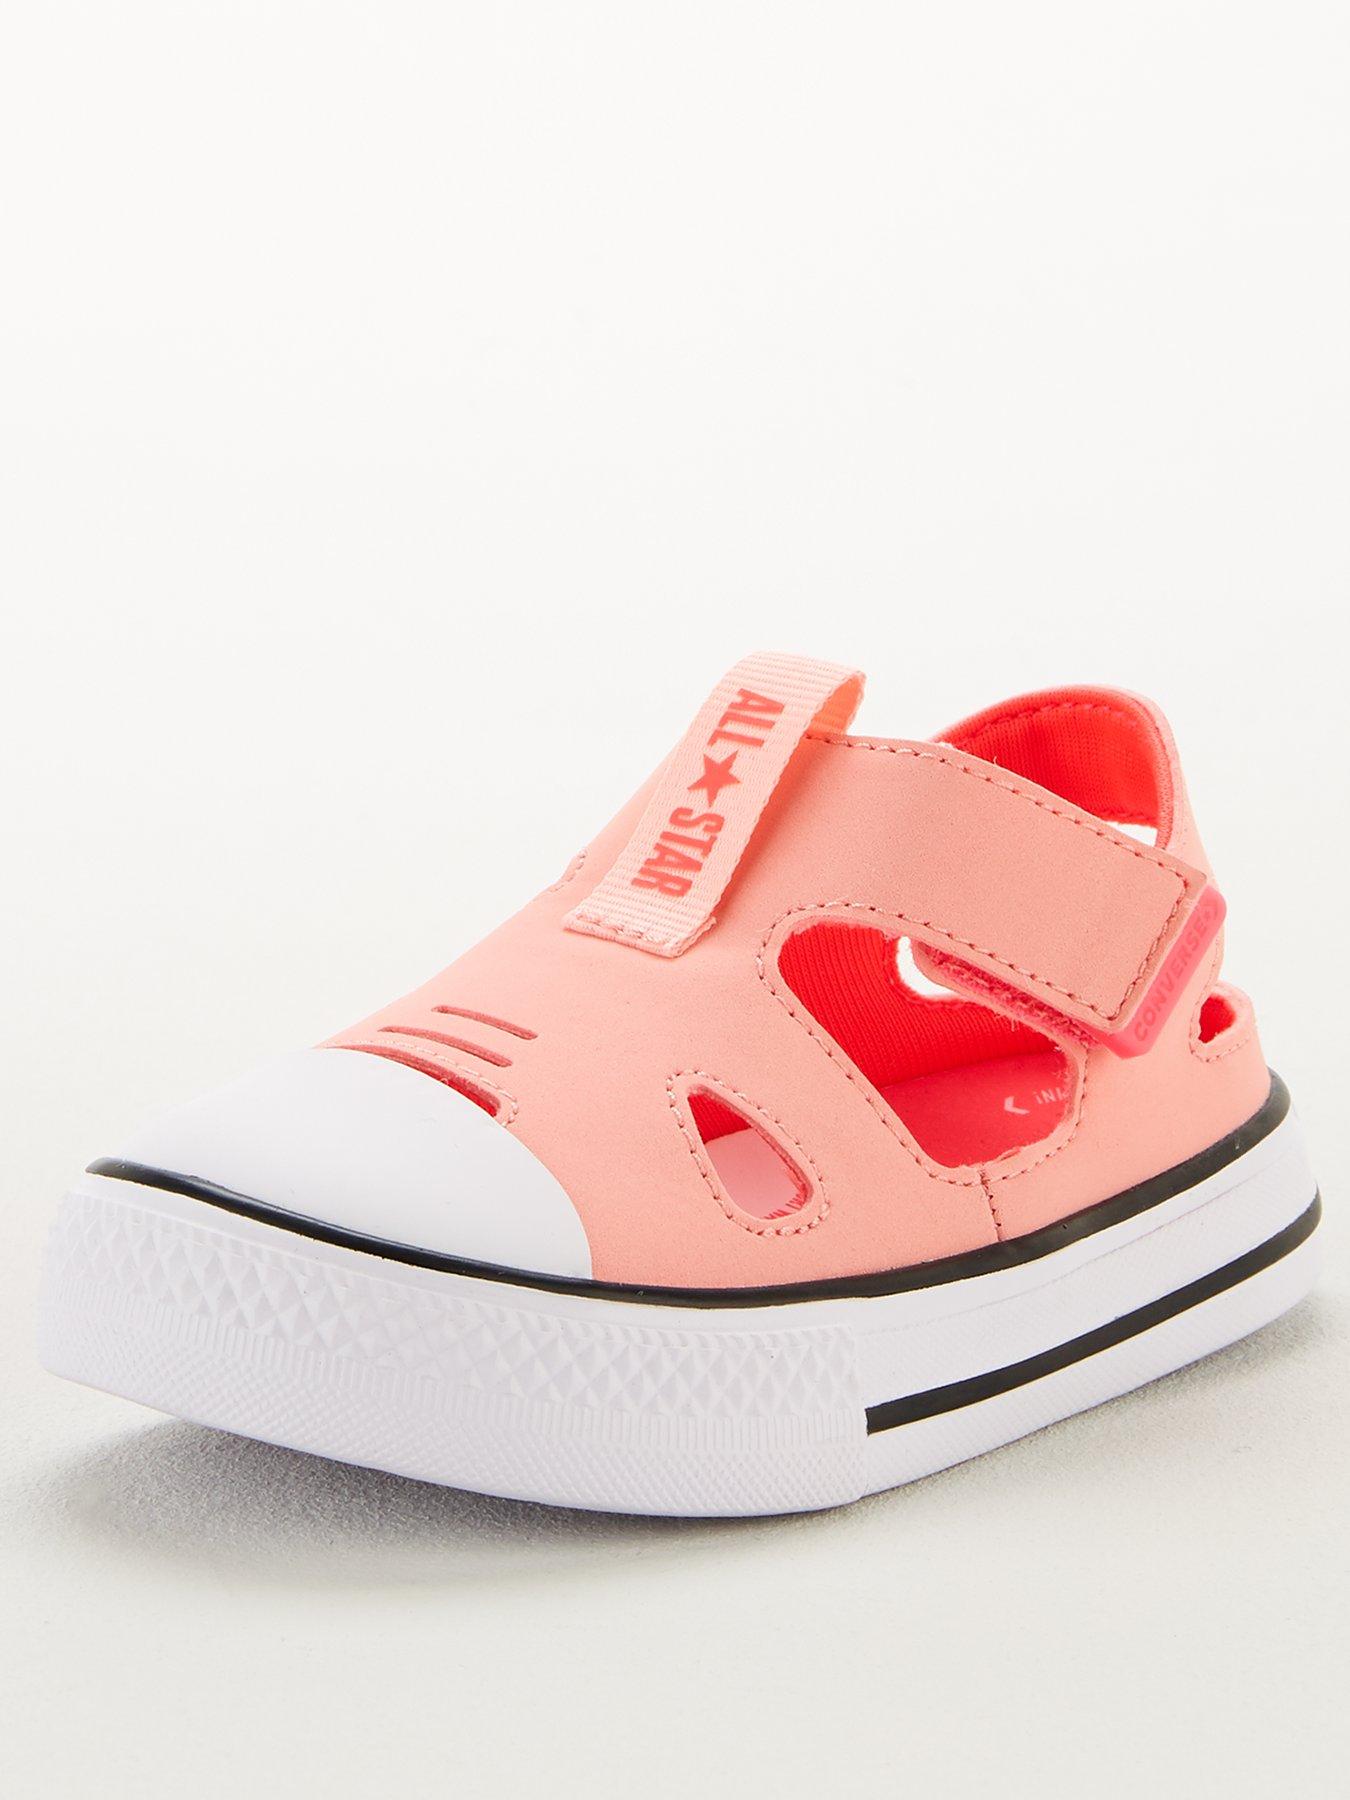 converse sandals toddler